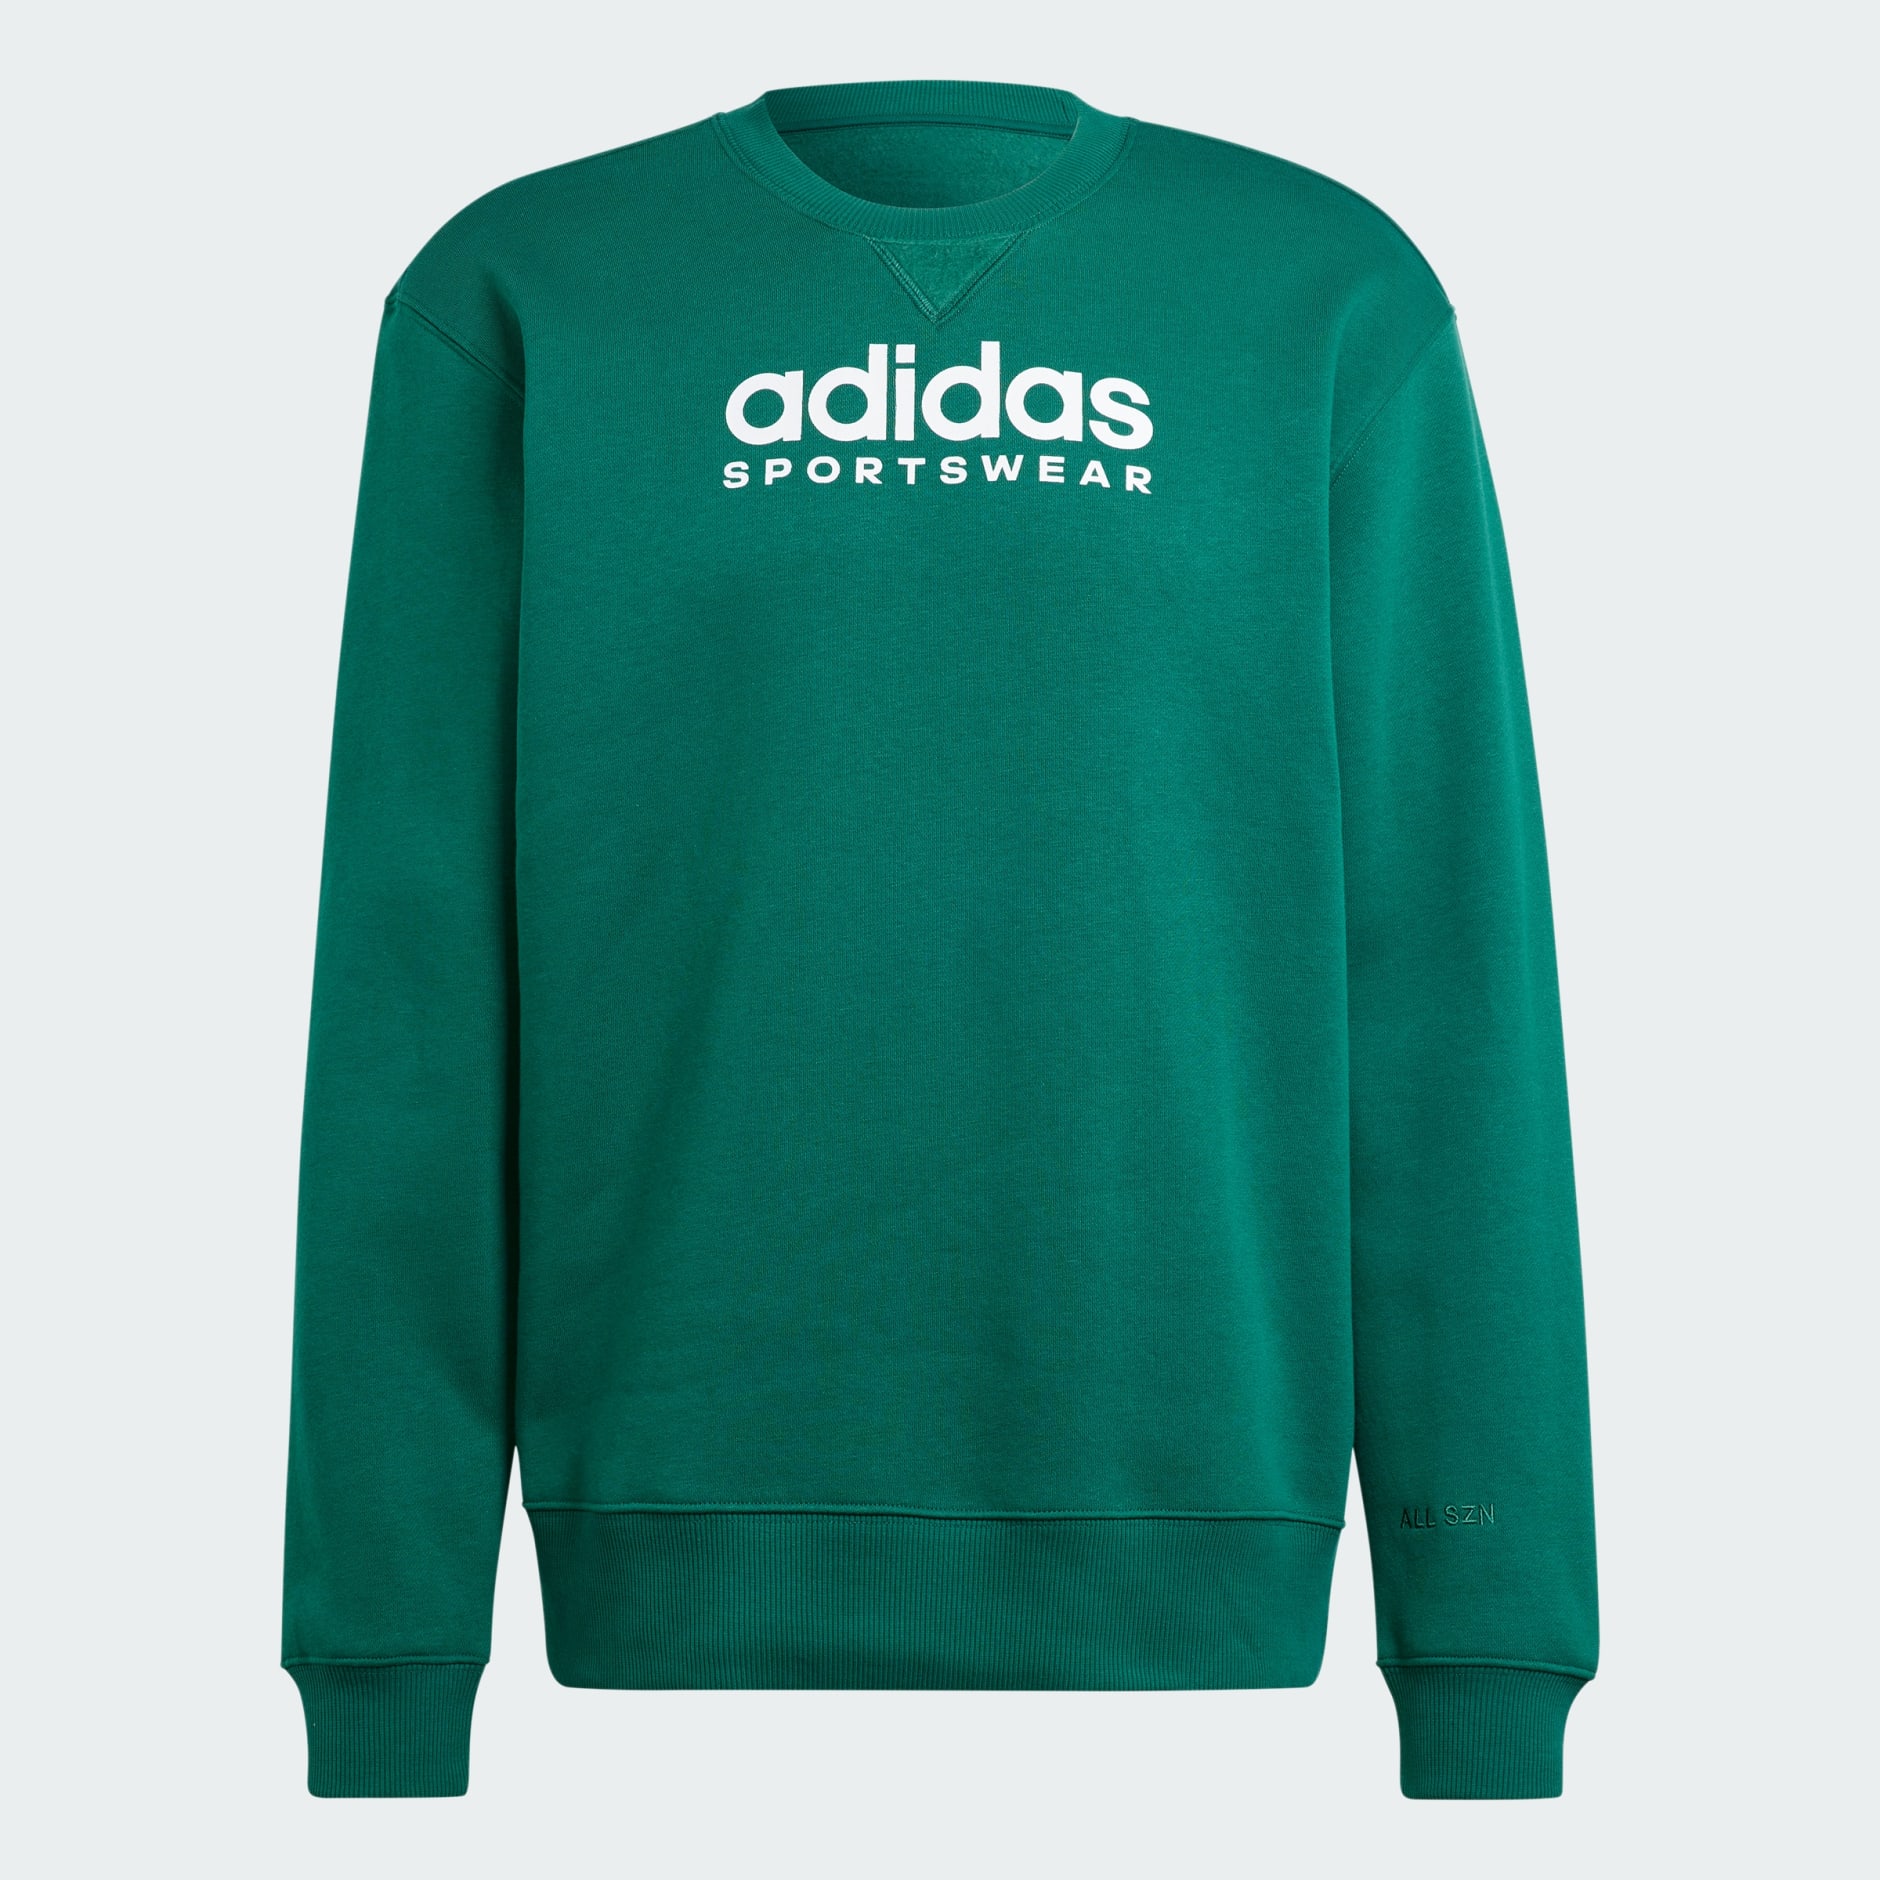 Sweatshirts - All SZN Green Fleece adidas Arabia Saudi Graphic | Sweatshirt 